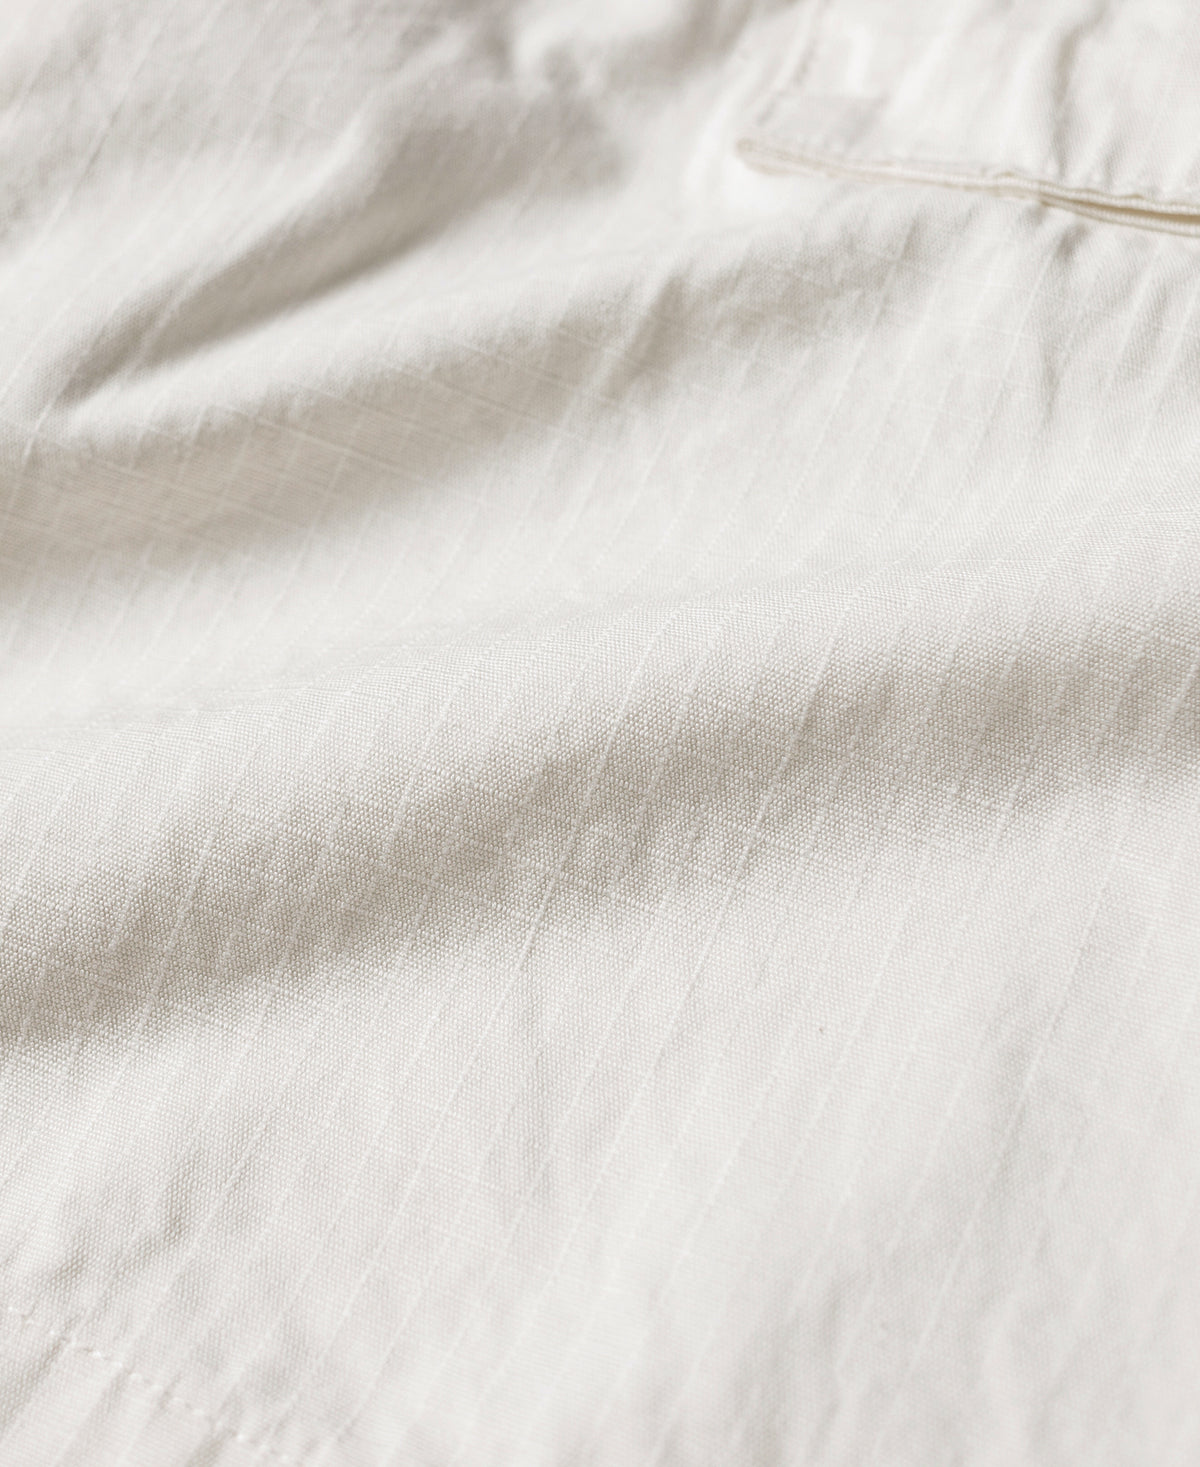 8.5 oz Cotton Ripstop Cargo Shorts - White